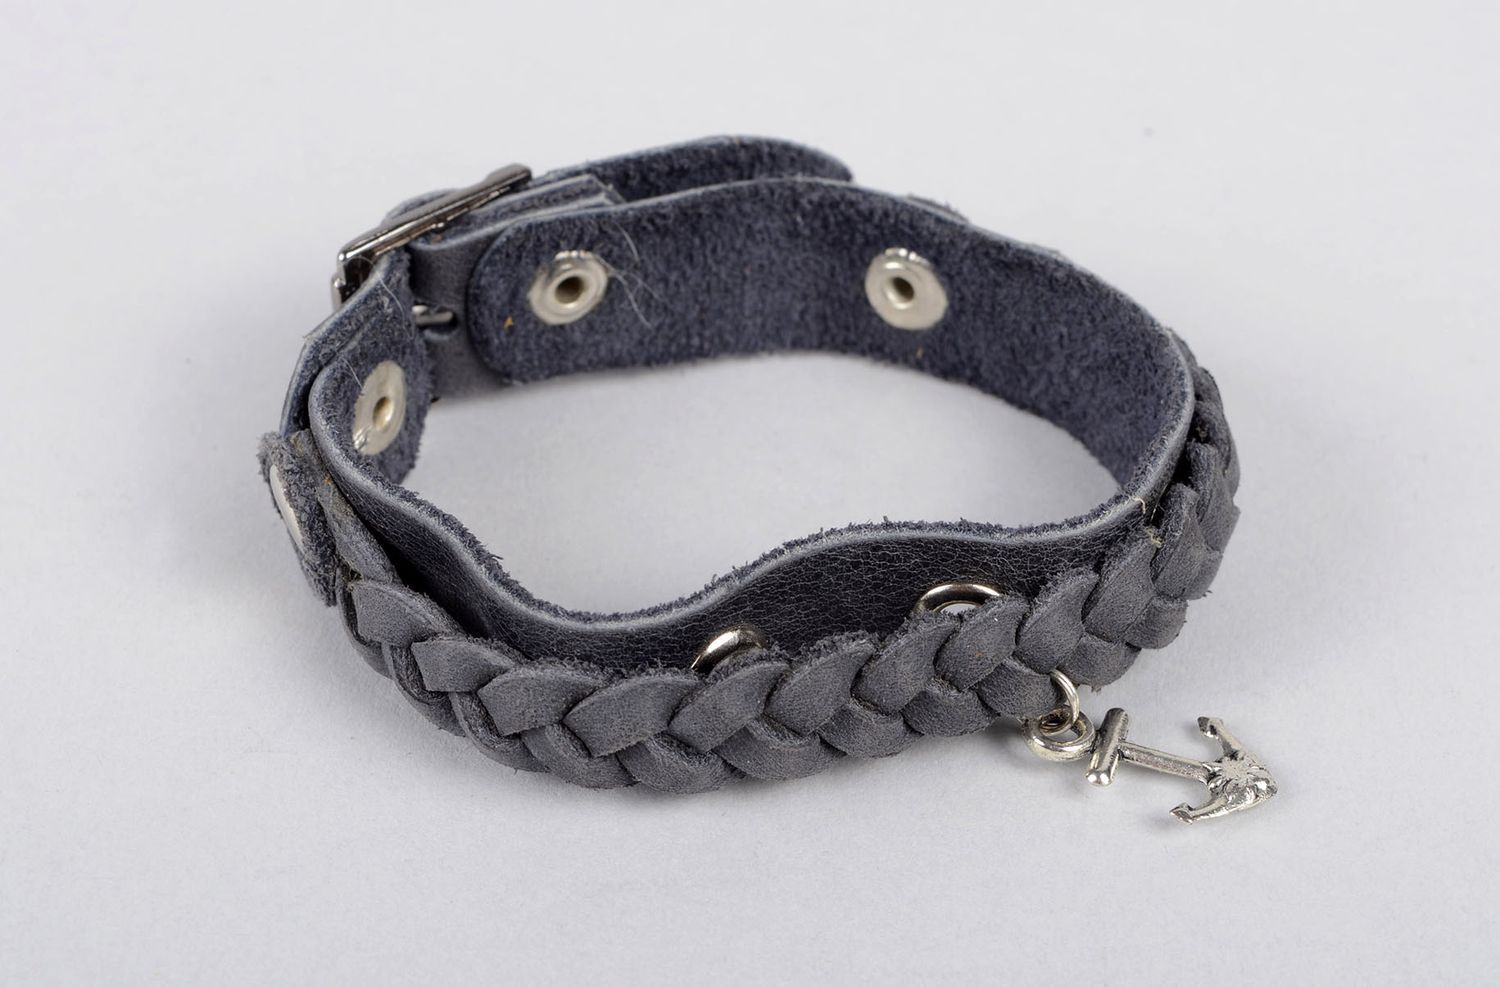 Stylish handmade leather bracelet fashion trends leather goods small gifts photo 1